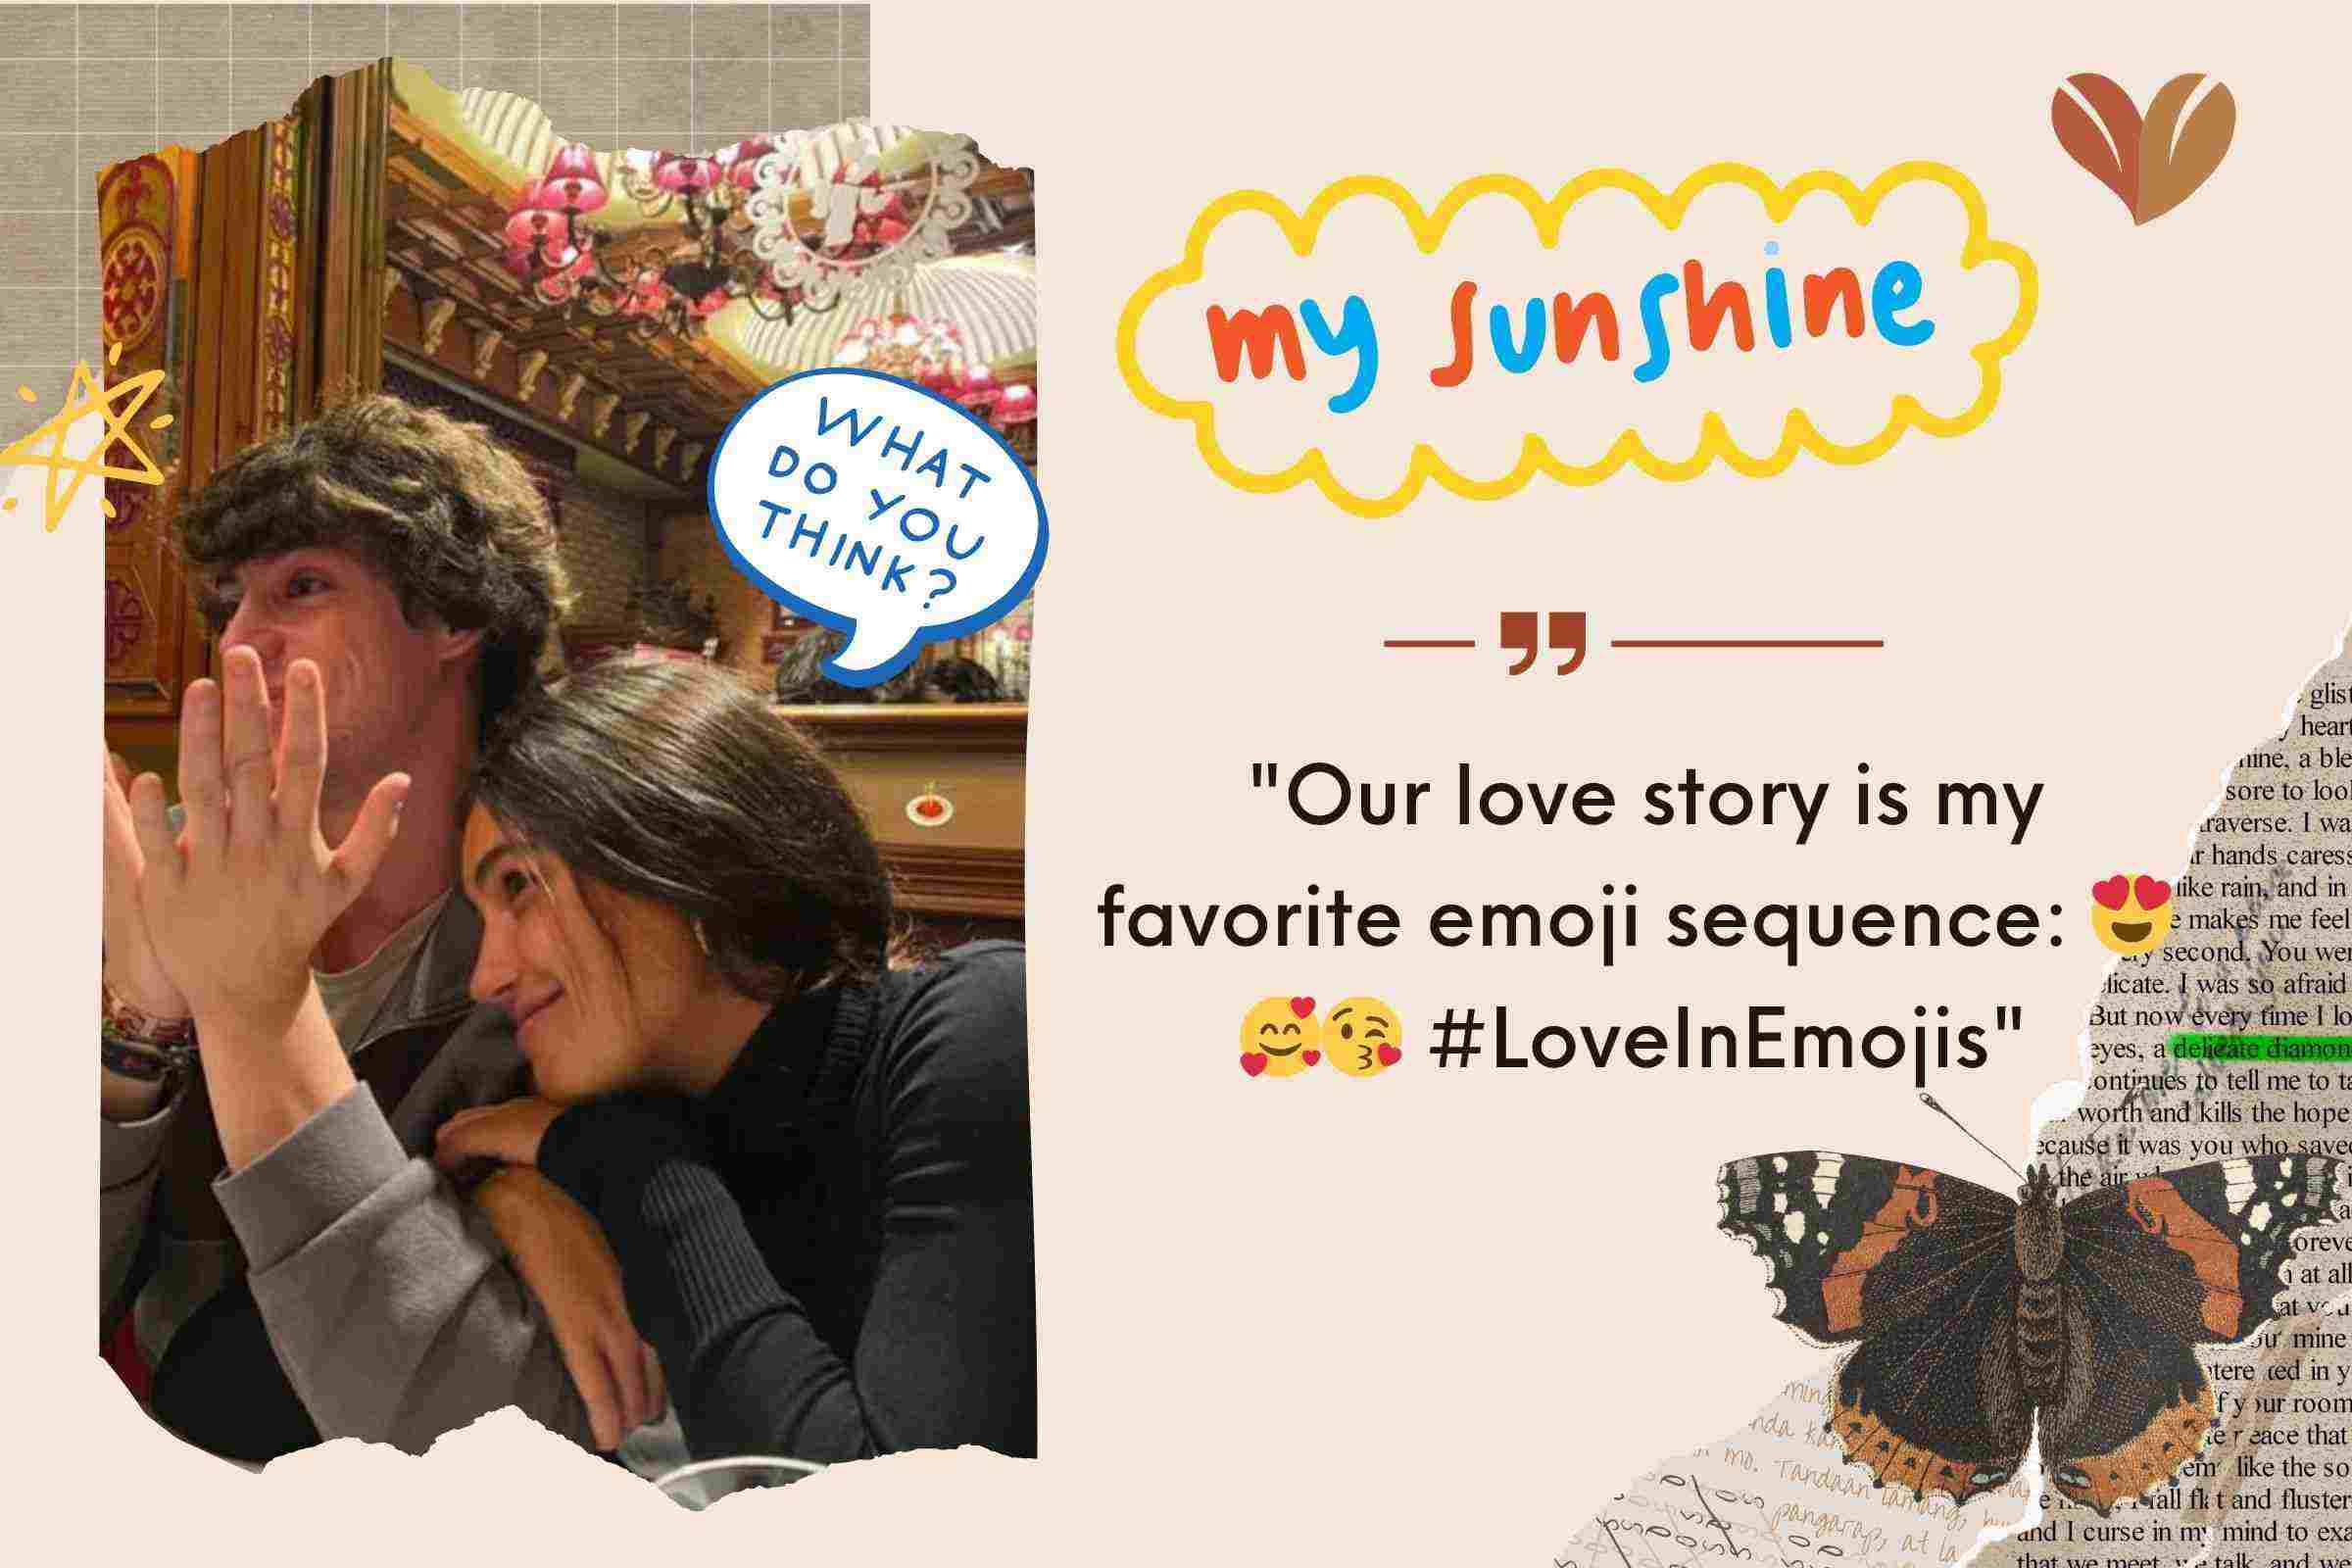 "Our love story is my favorite emoji sequence: 😍🥰😘 #LoveInEmojis"